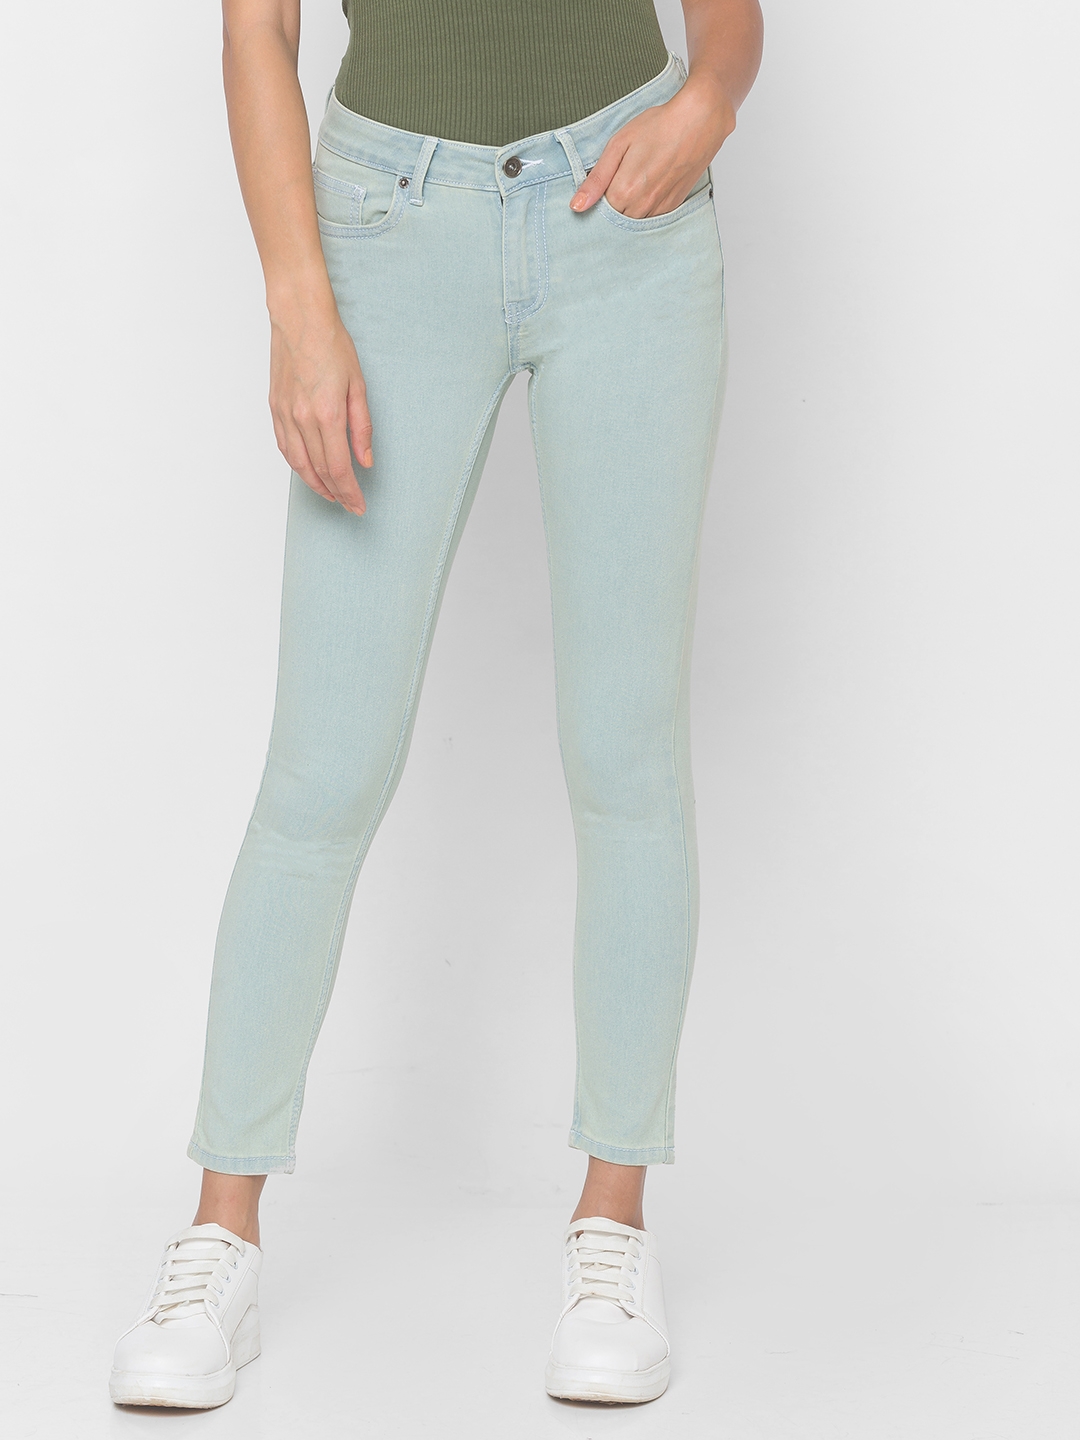 globus | Women's Blue Cotton Solid Skinny Jeans 0